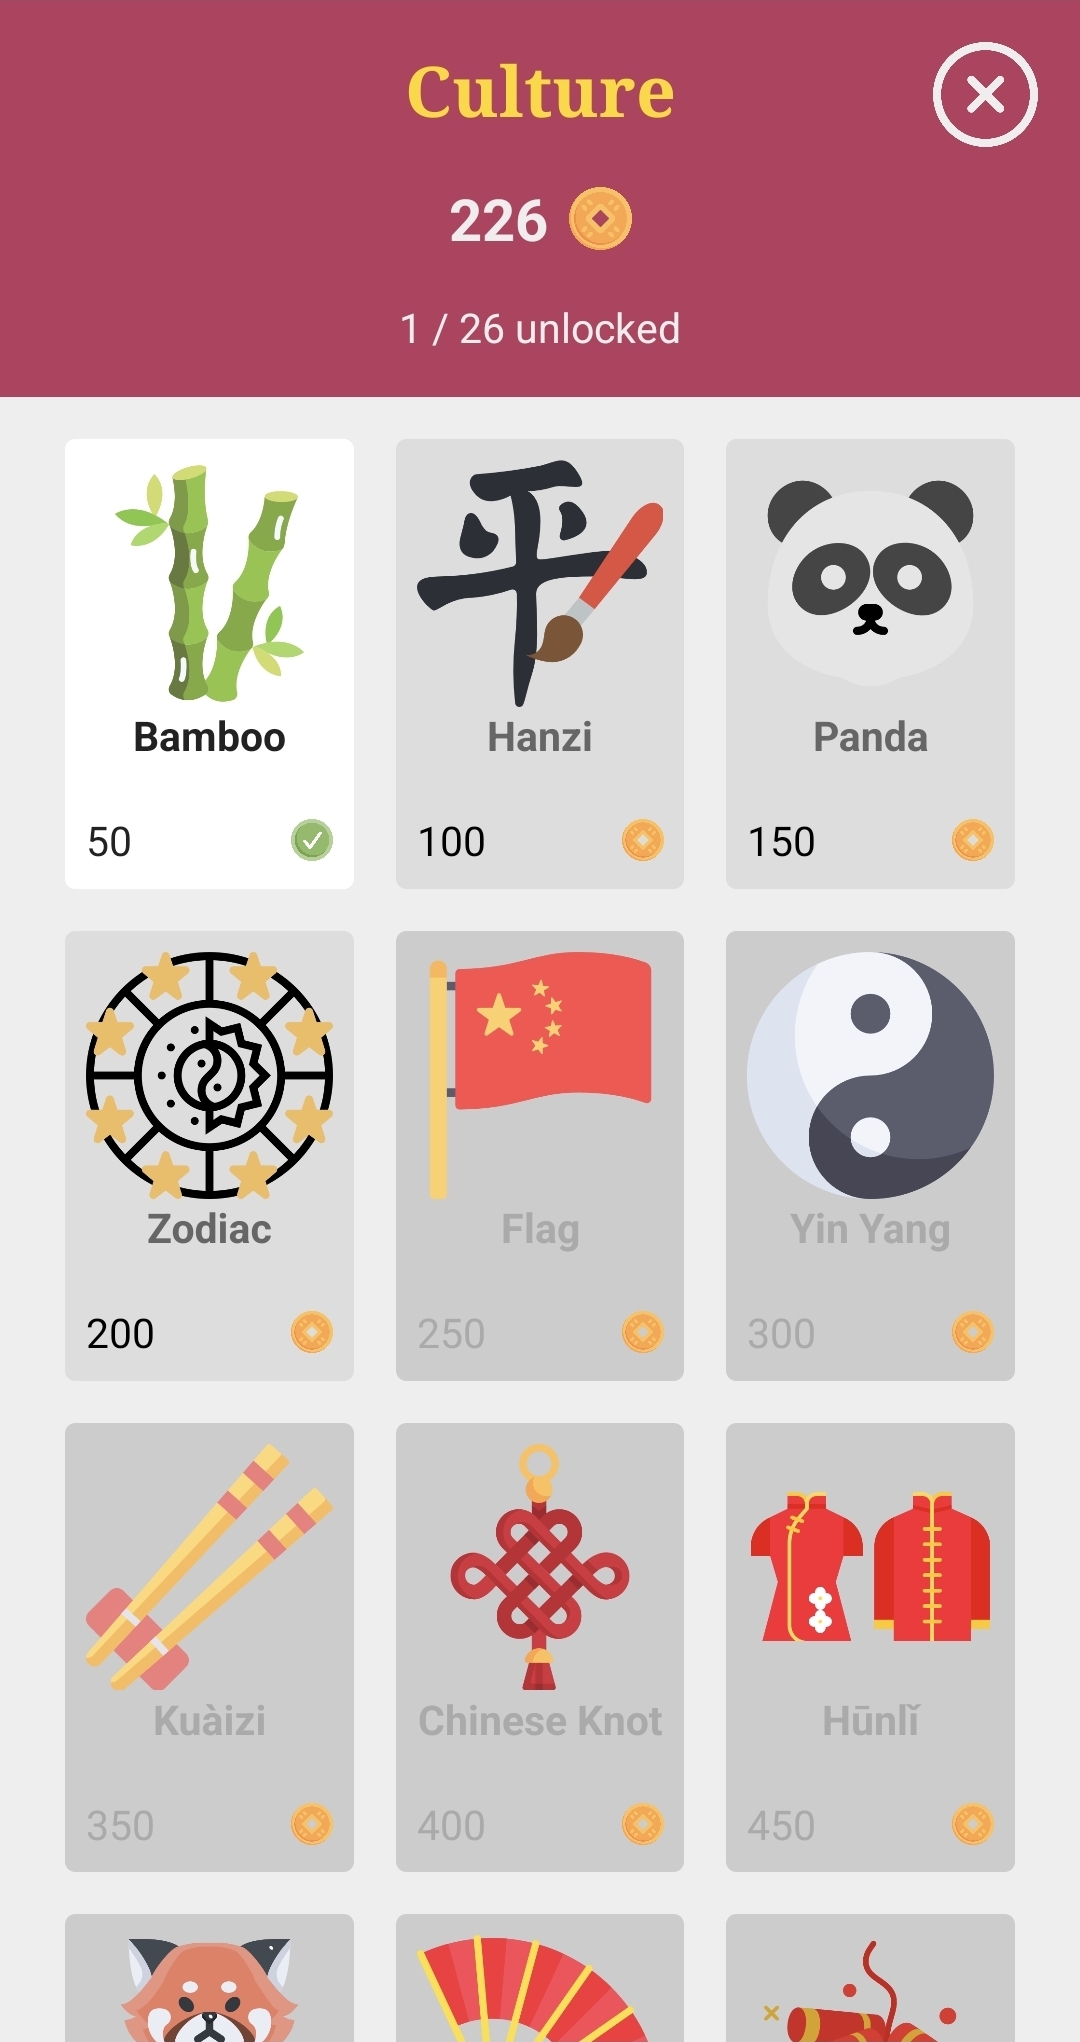 Hanzi application culture feature screenshot